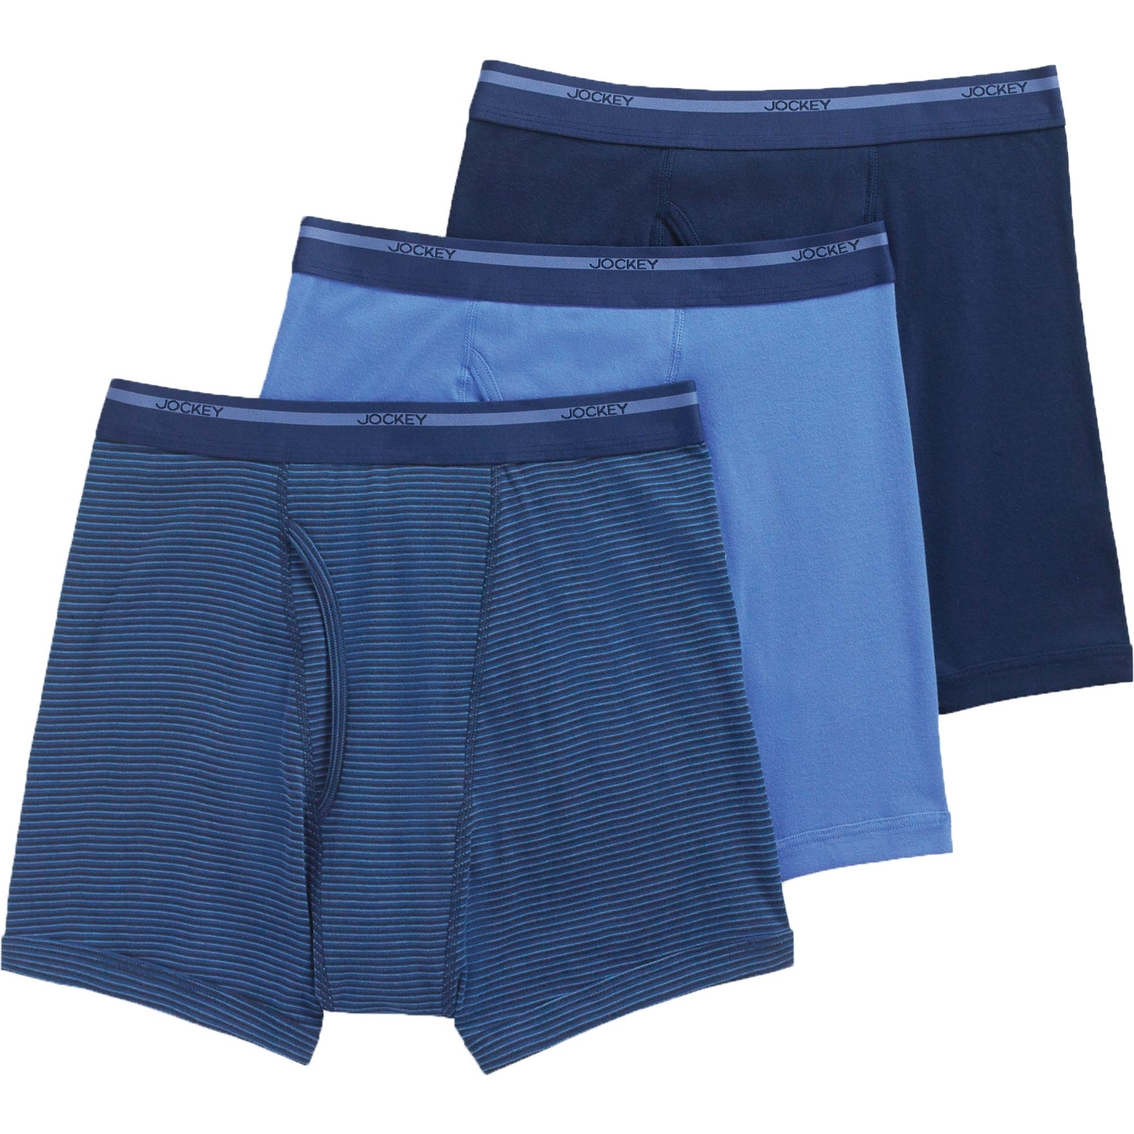 Jockey Classic Cotton Boxer Briefs 3 Pk. | Underwear | Clothing ...